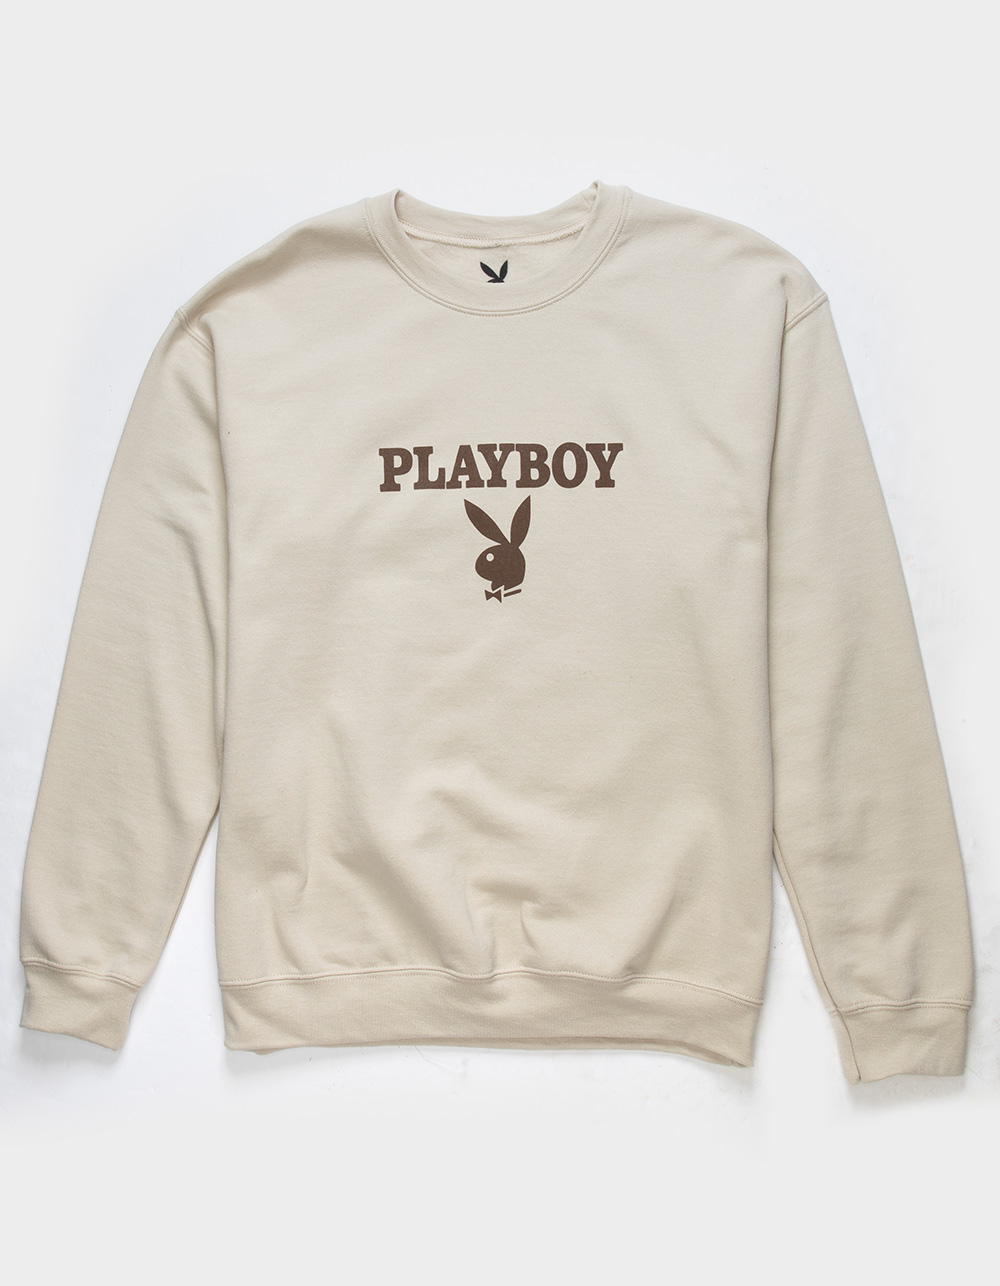 PLAYBOY Crew Fleece Logo Mens Sweatshirt - SAND